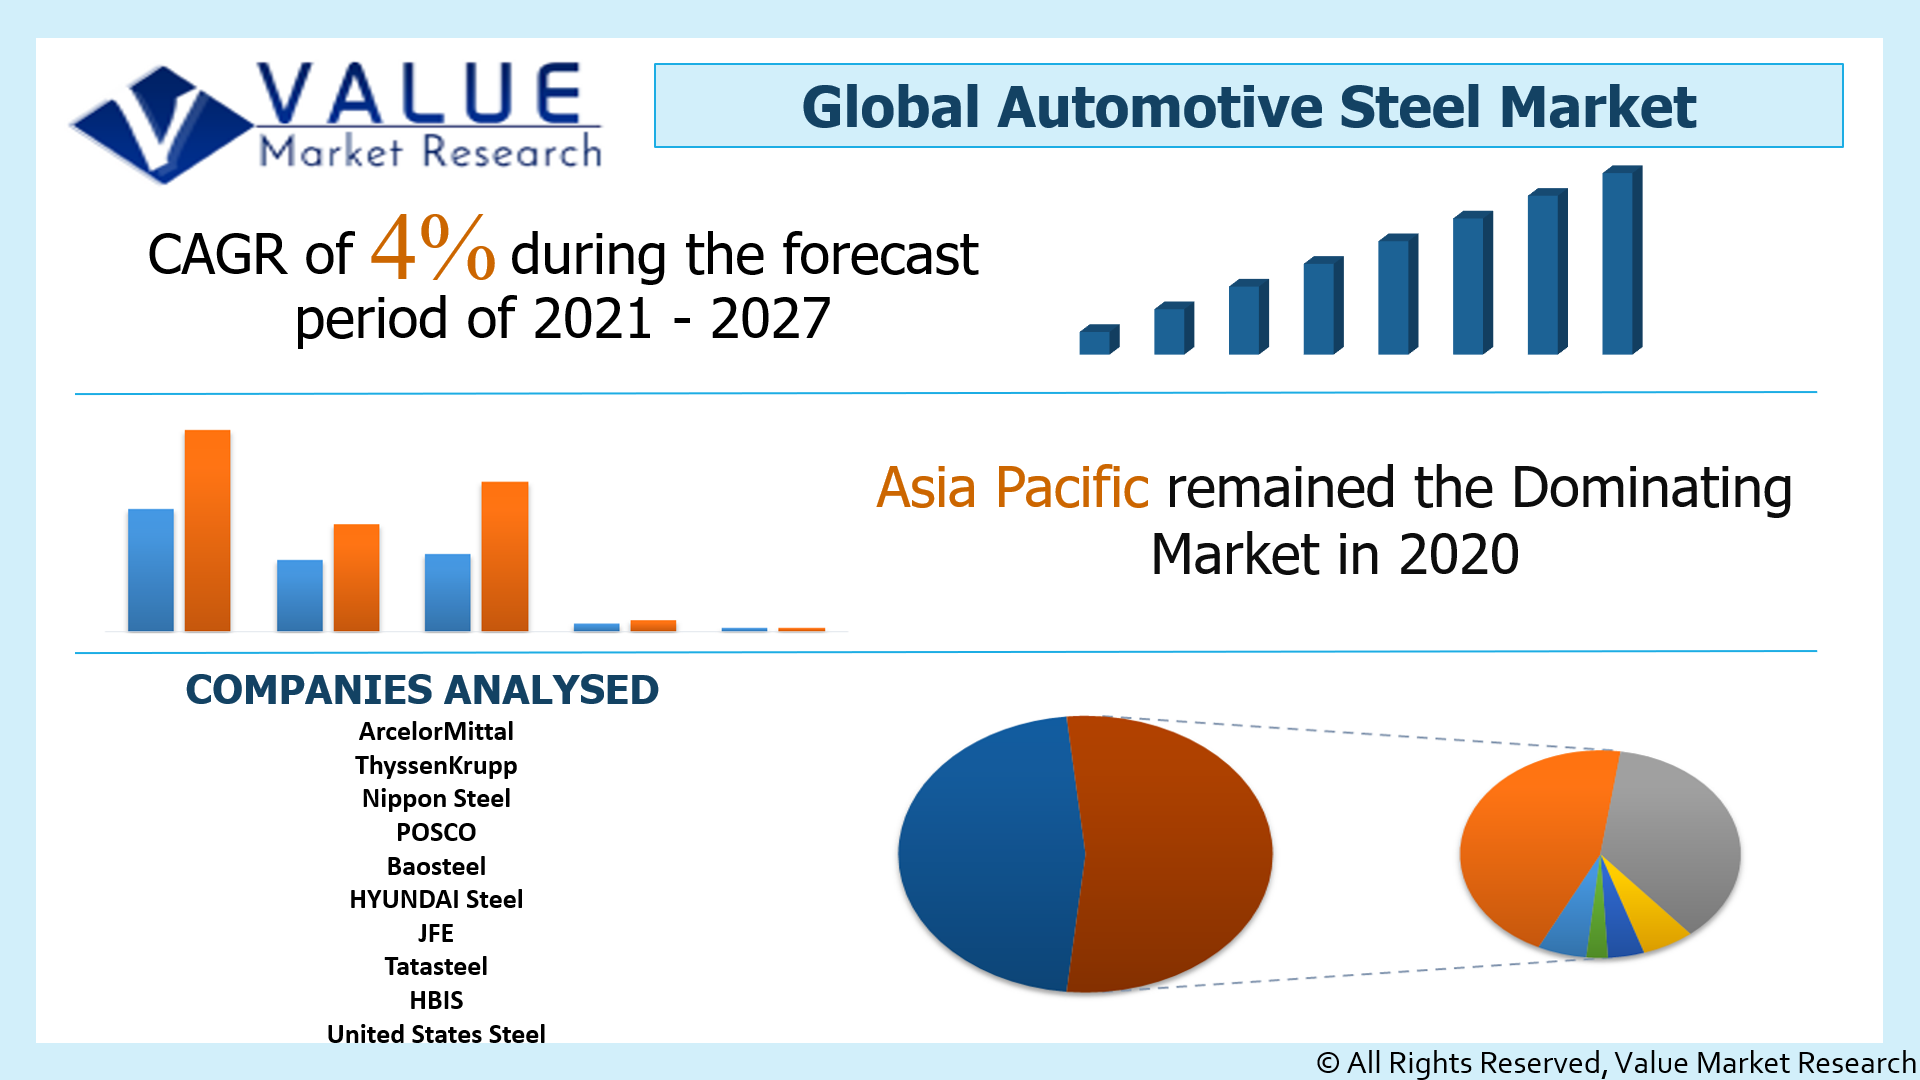 Global Automotive Steel Market Share